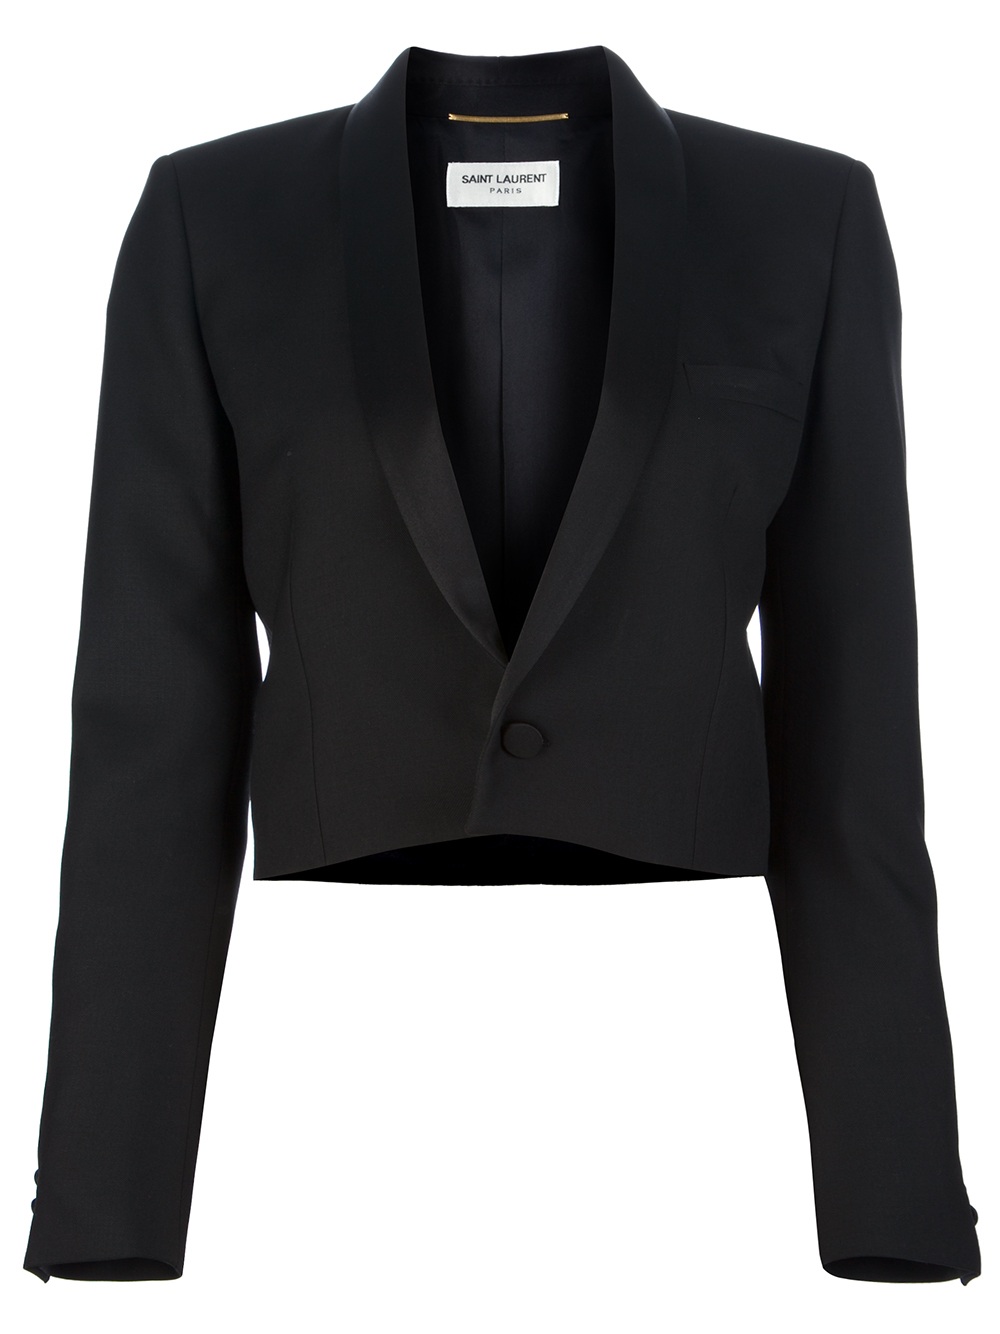 Lyst - Saint Laurent Cropped Jacket in Black